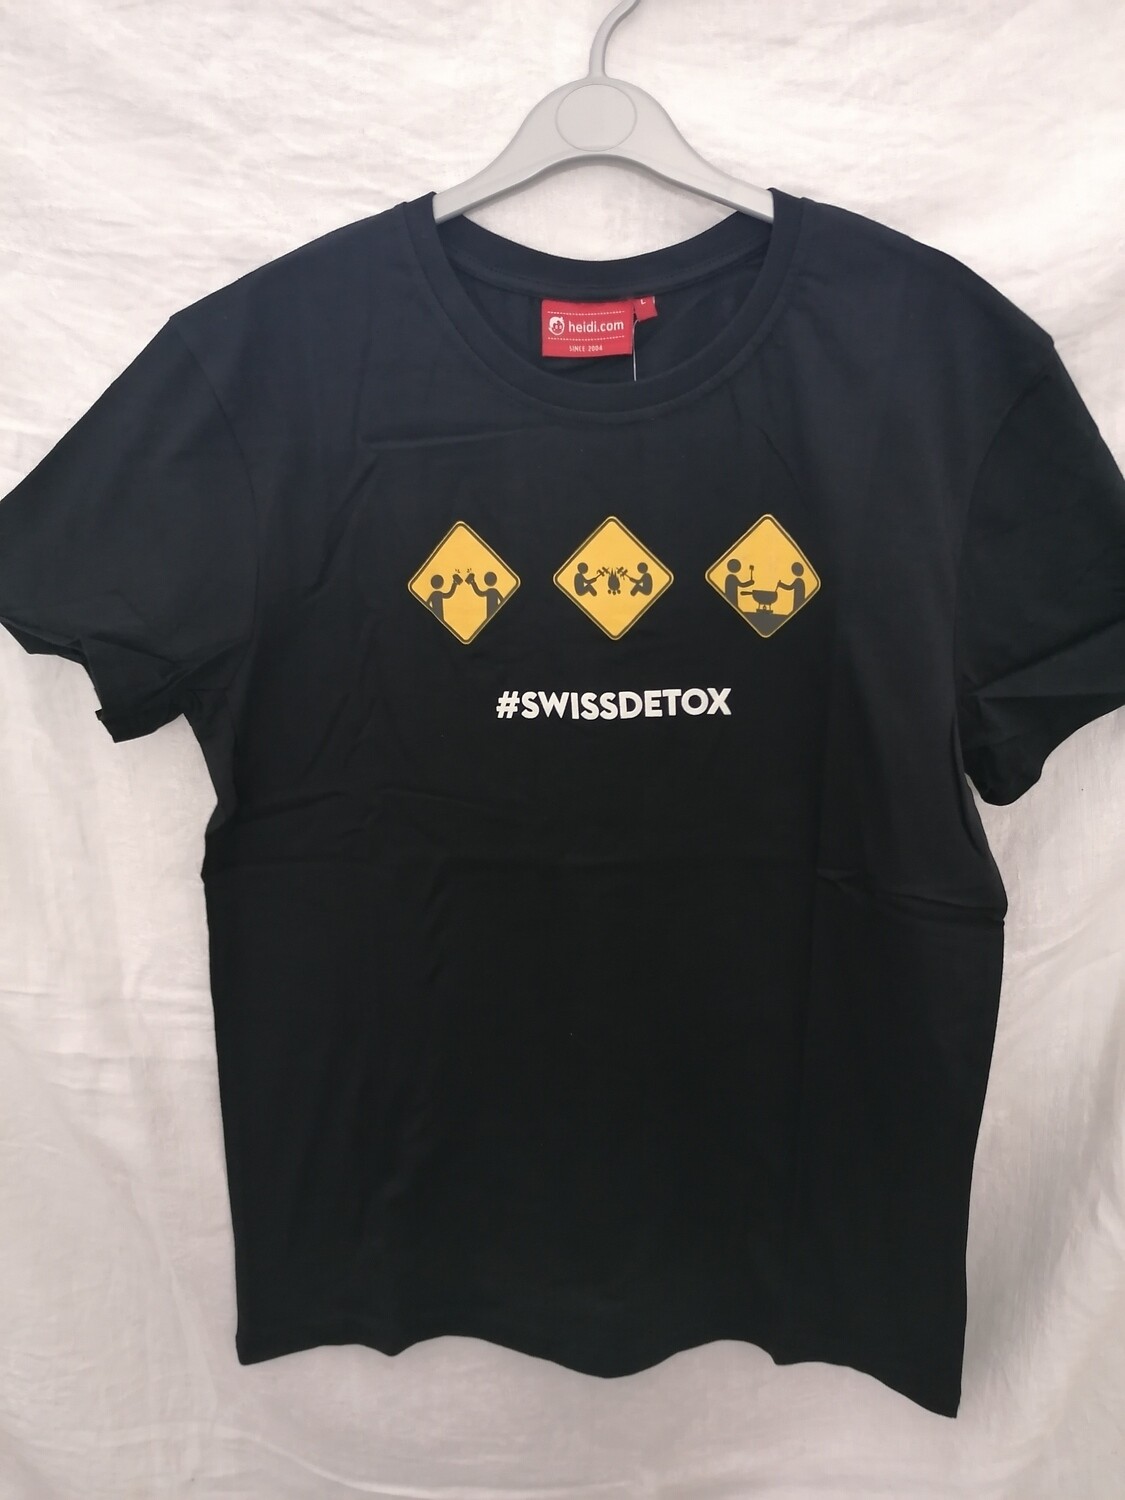 Tee shirt noir imprimé Swissdetox